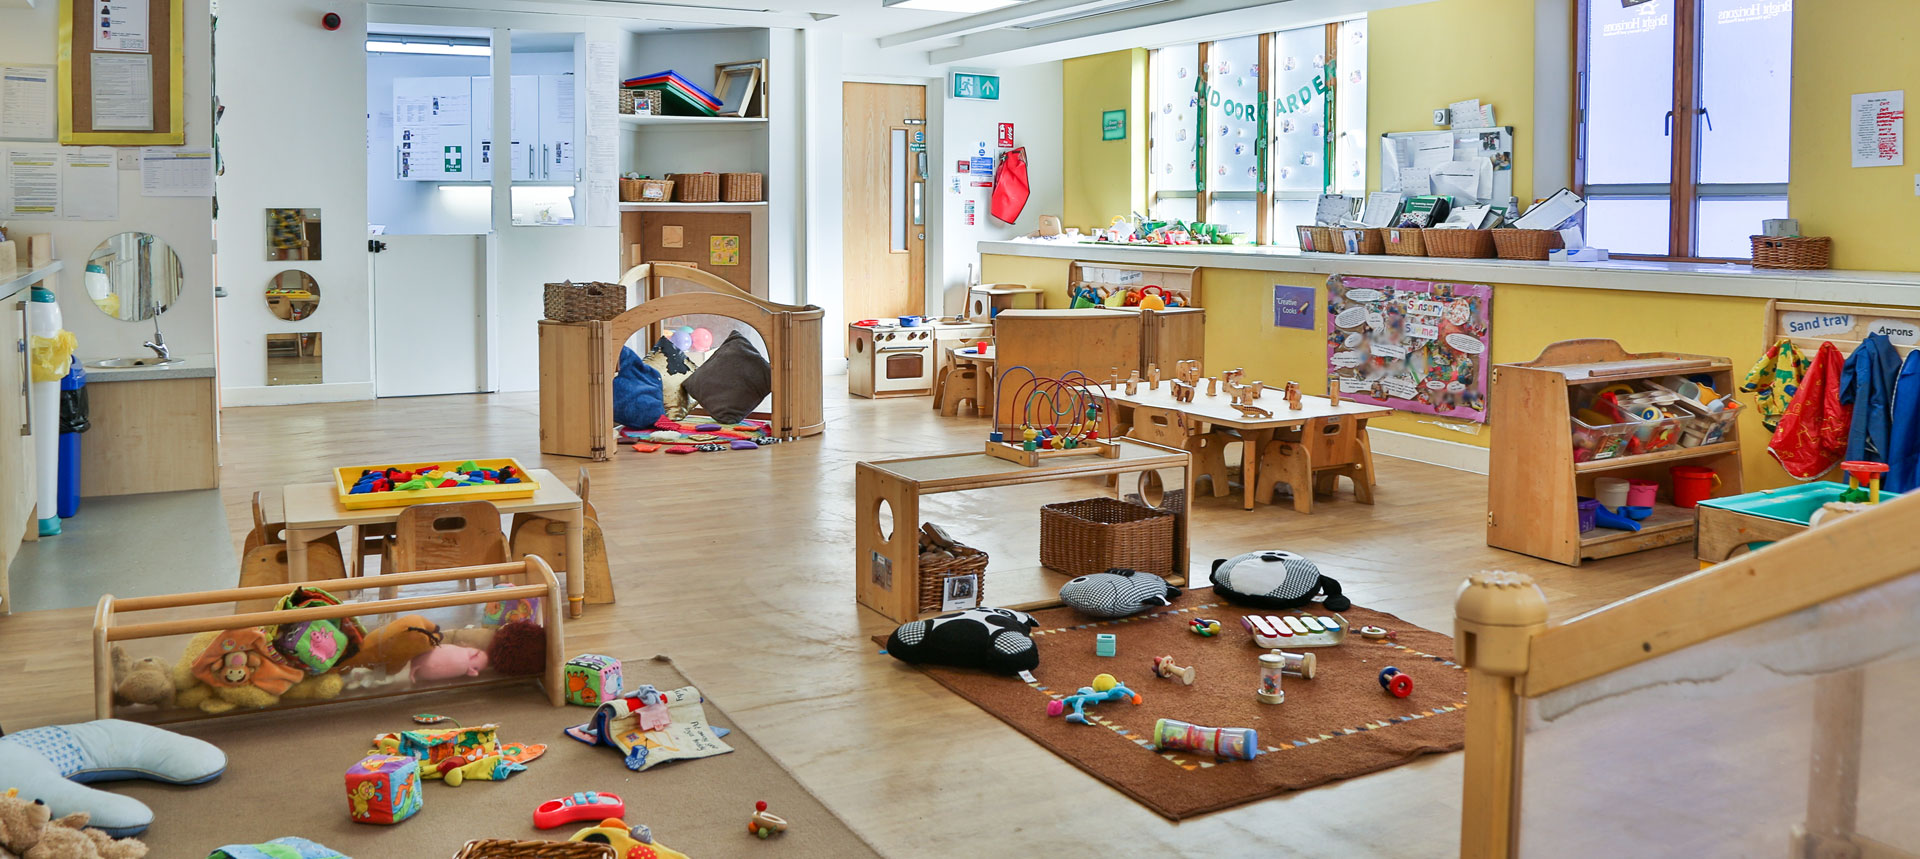 Spitalfields Day Nursery and Preschool